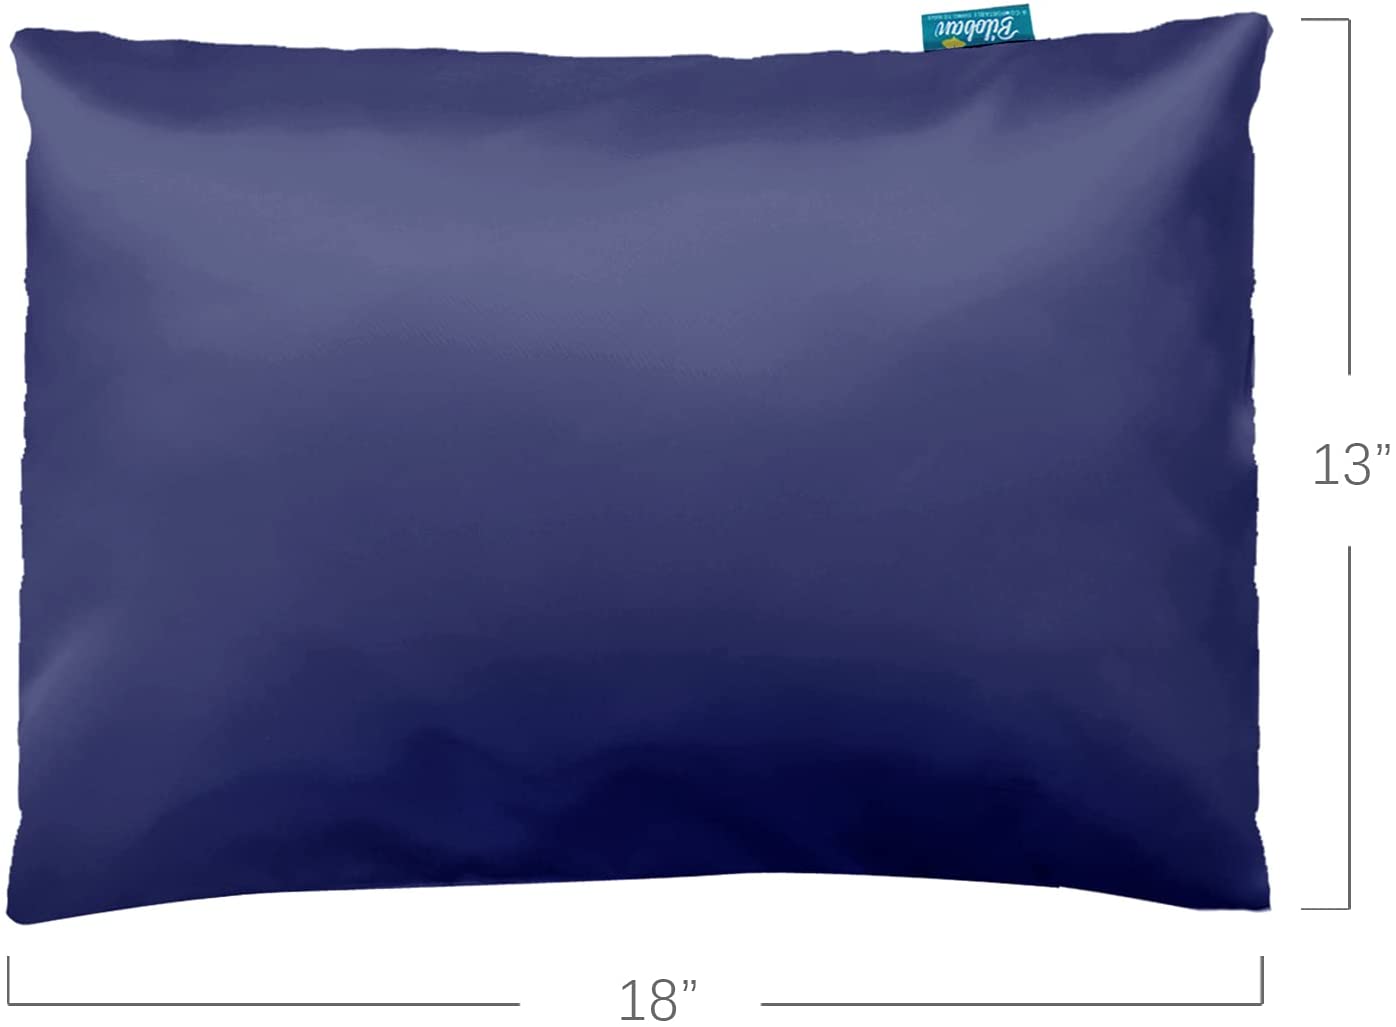 Toddler Pillowcase- 2 pack, Silky Soft Satin, Envelope Style, Navy